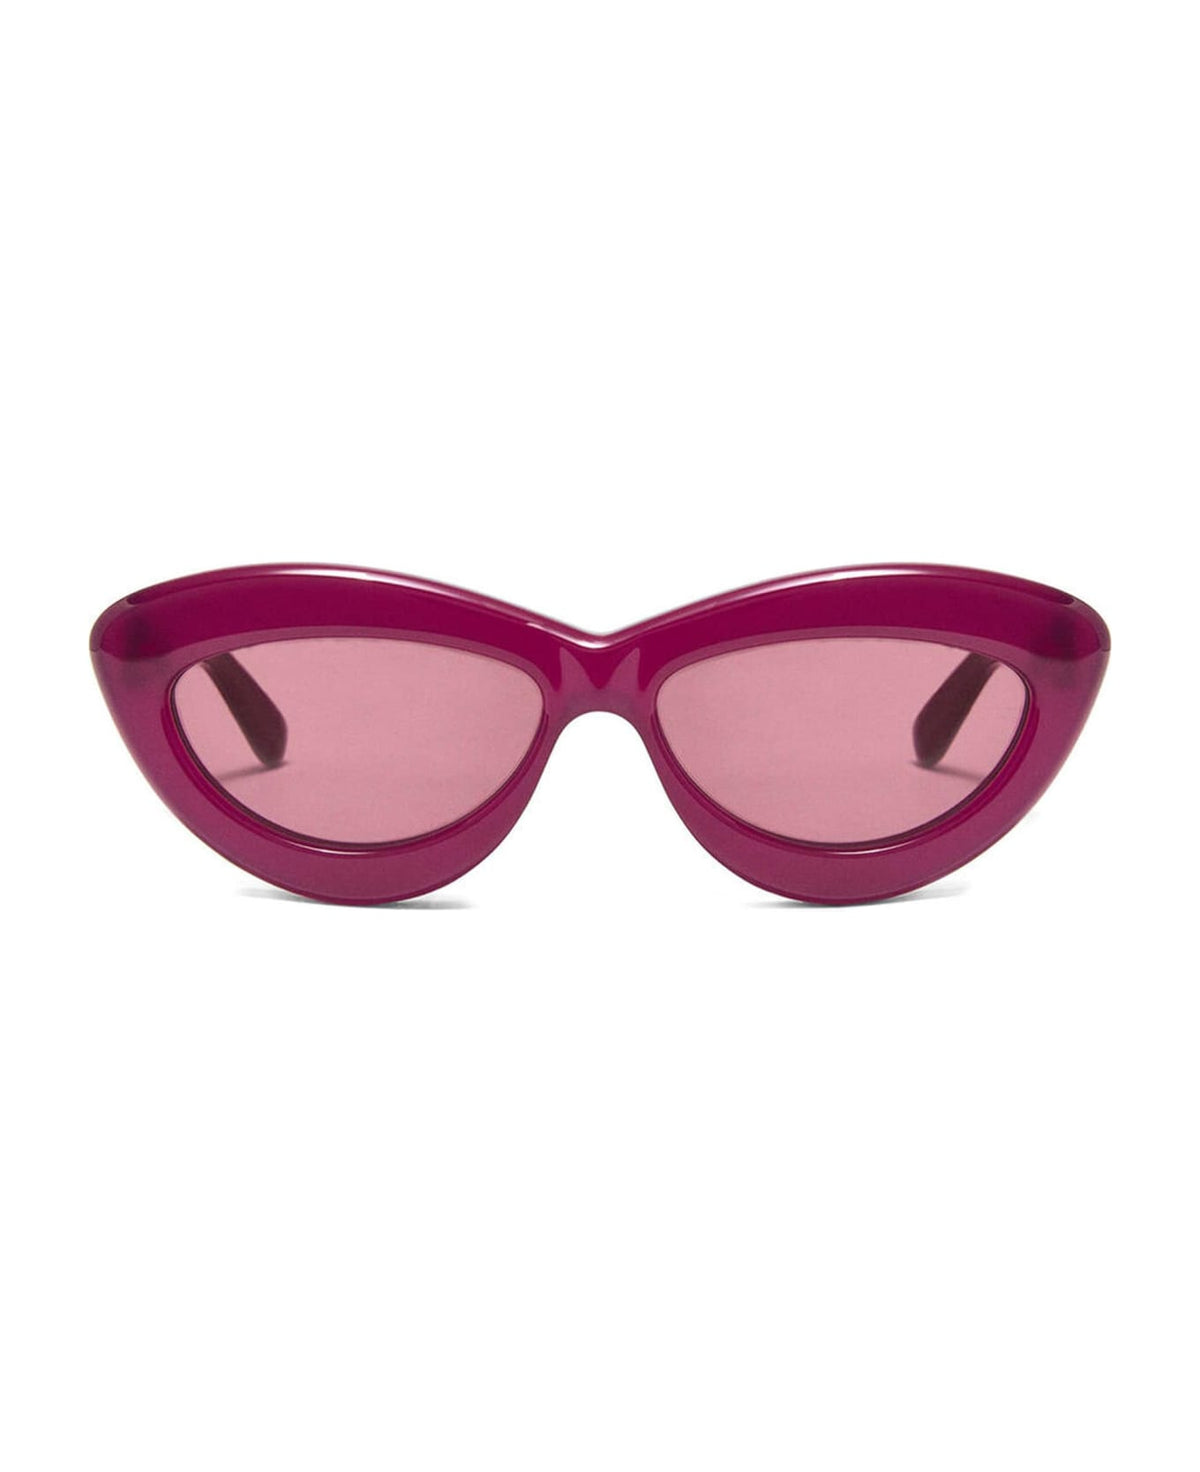 Lw40096i - Cherry Sunglasses